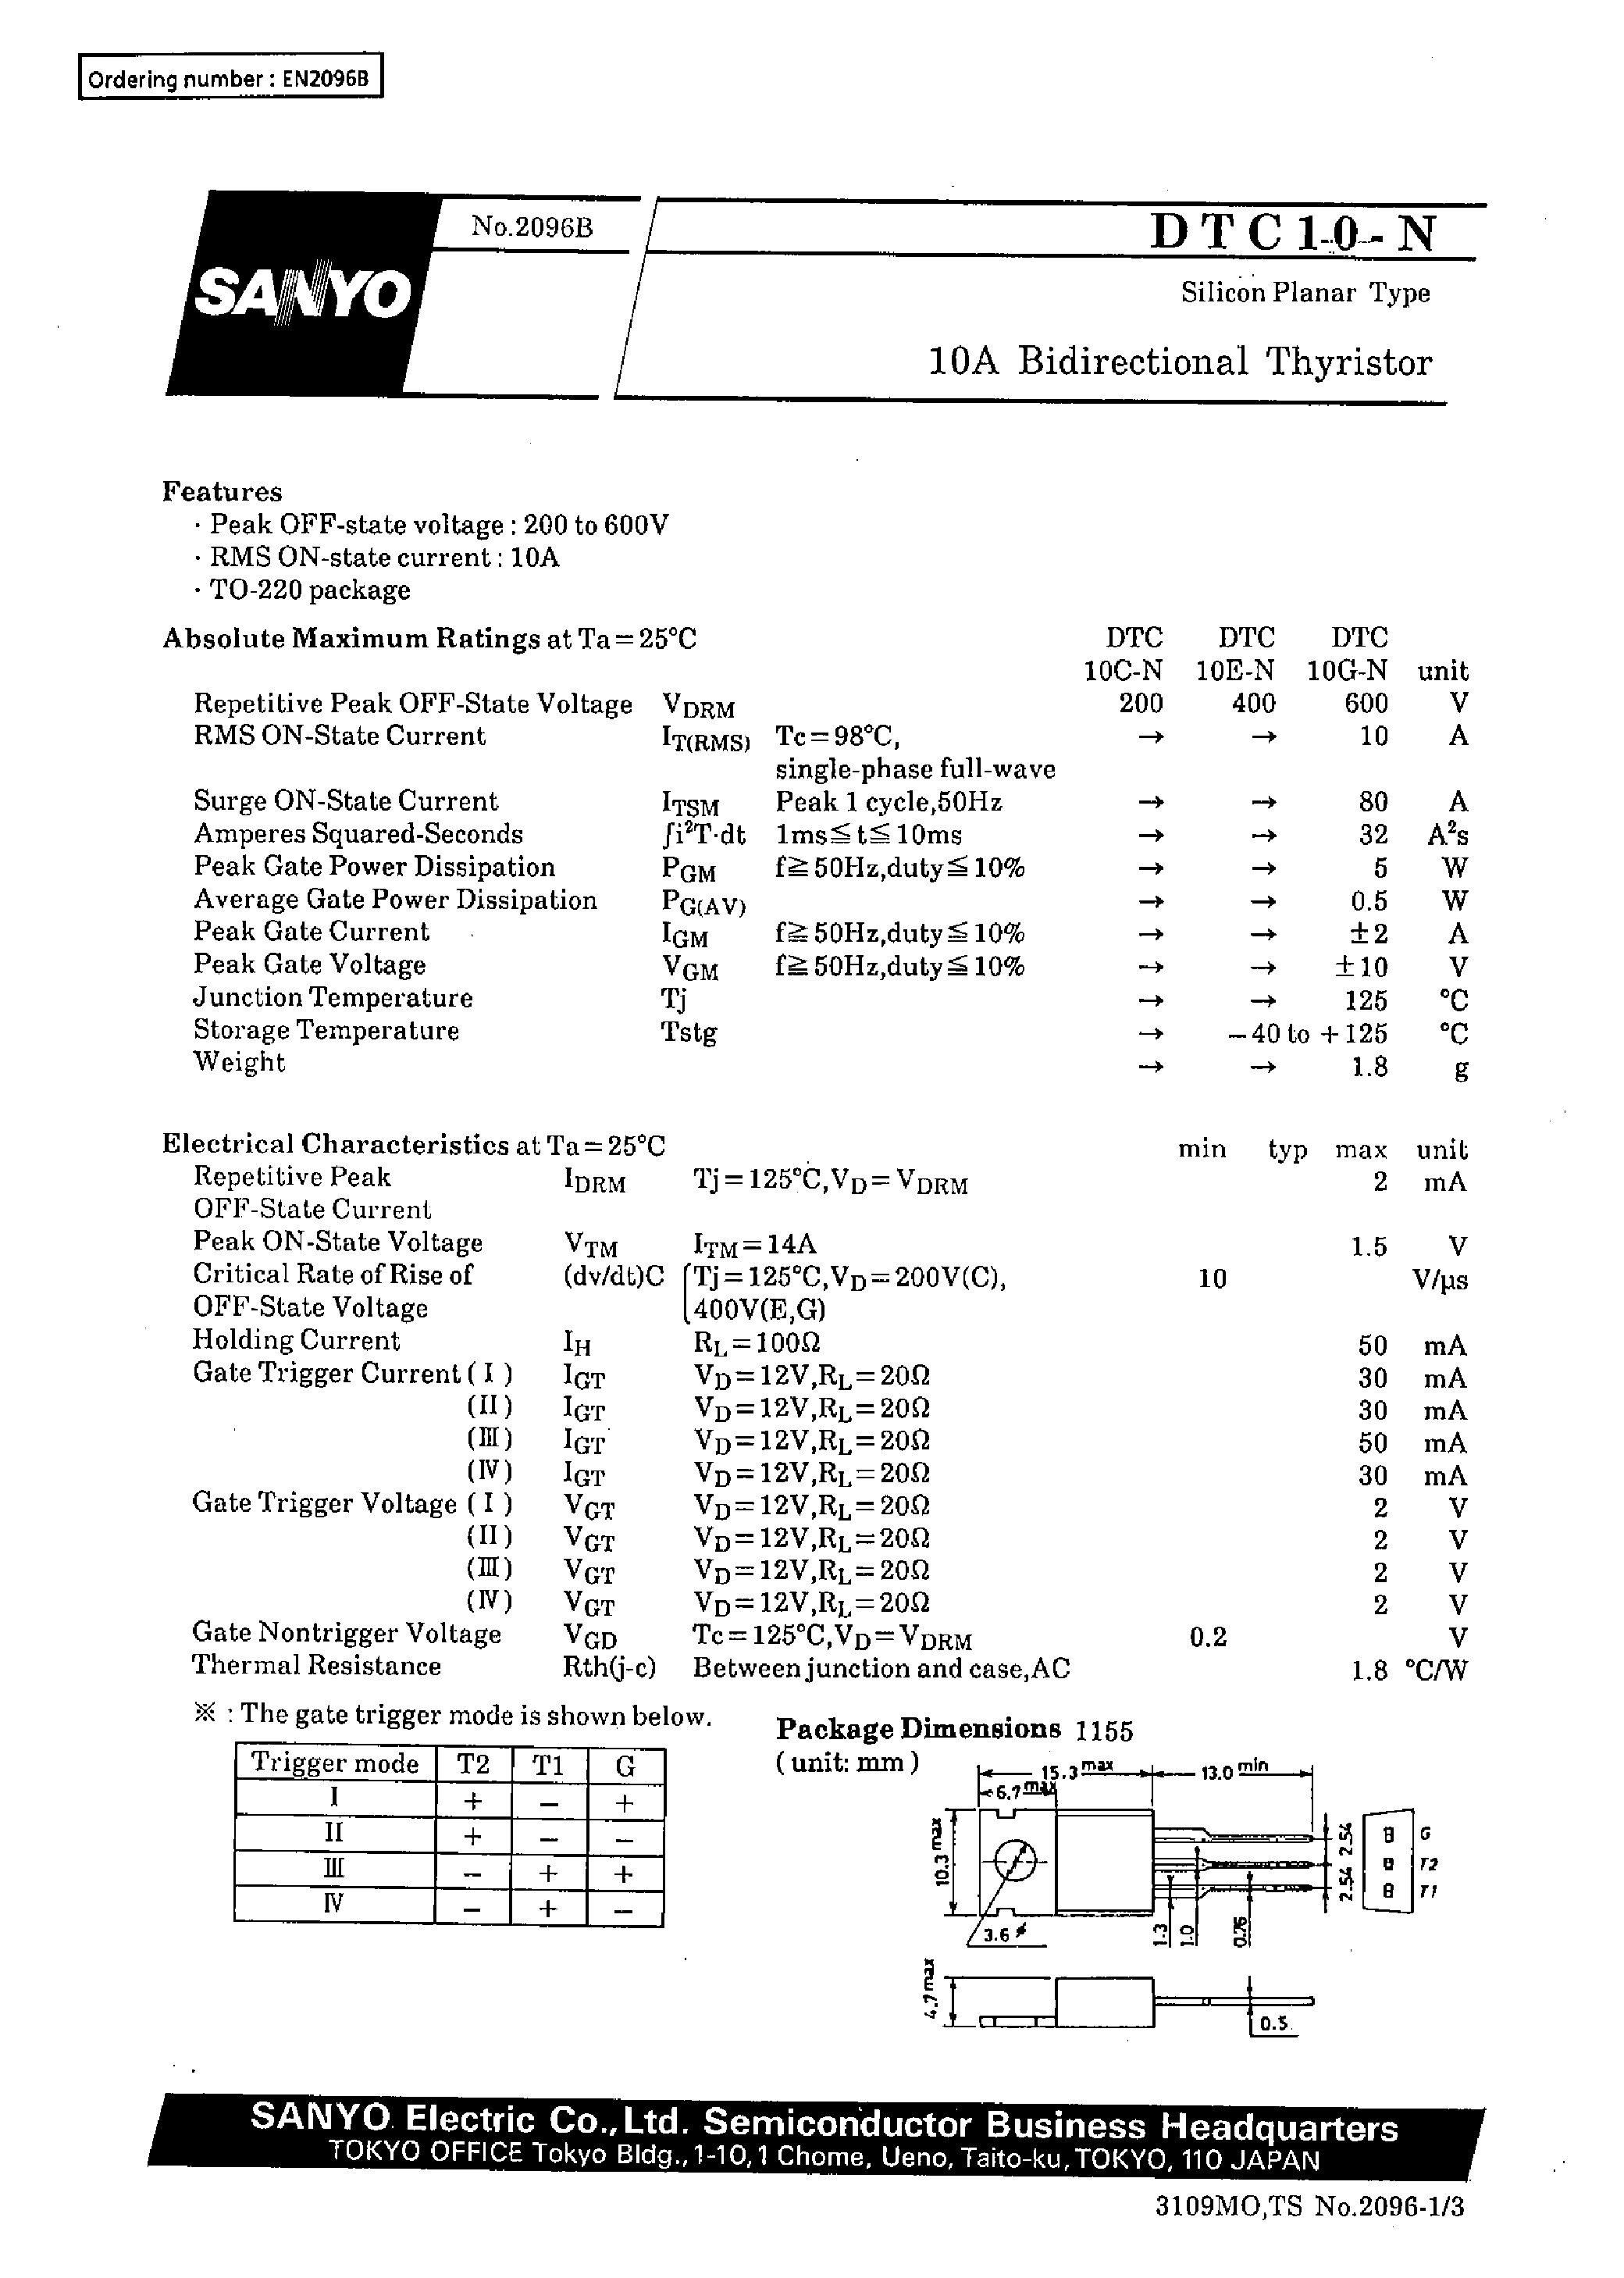 Datasheet DTC10E-N - 10A Bidirectional Thyristor page 1